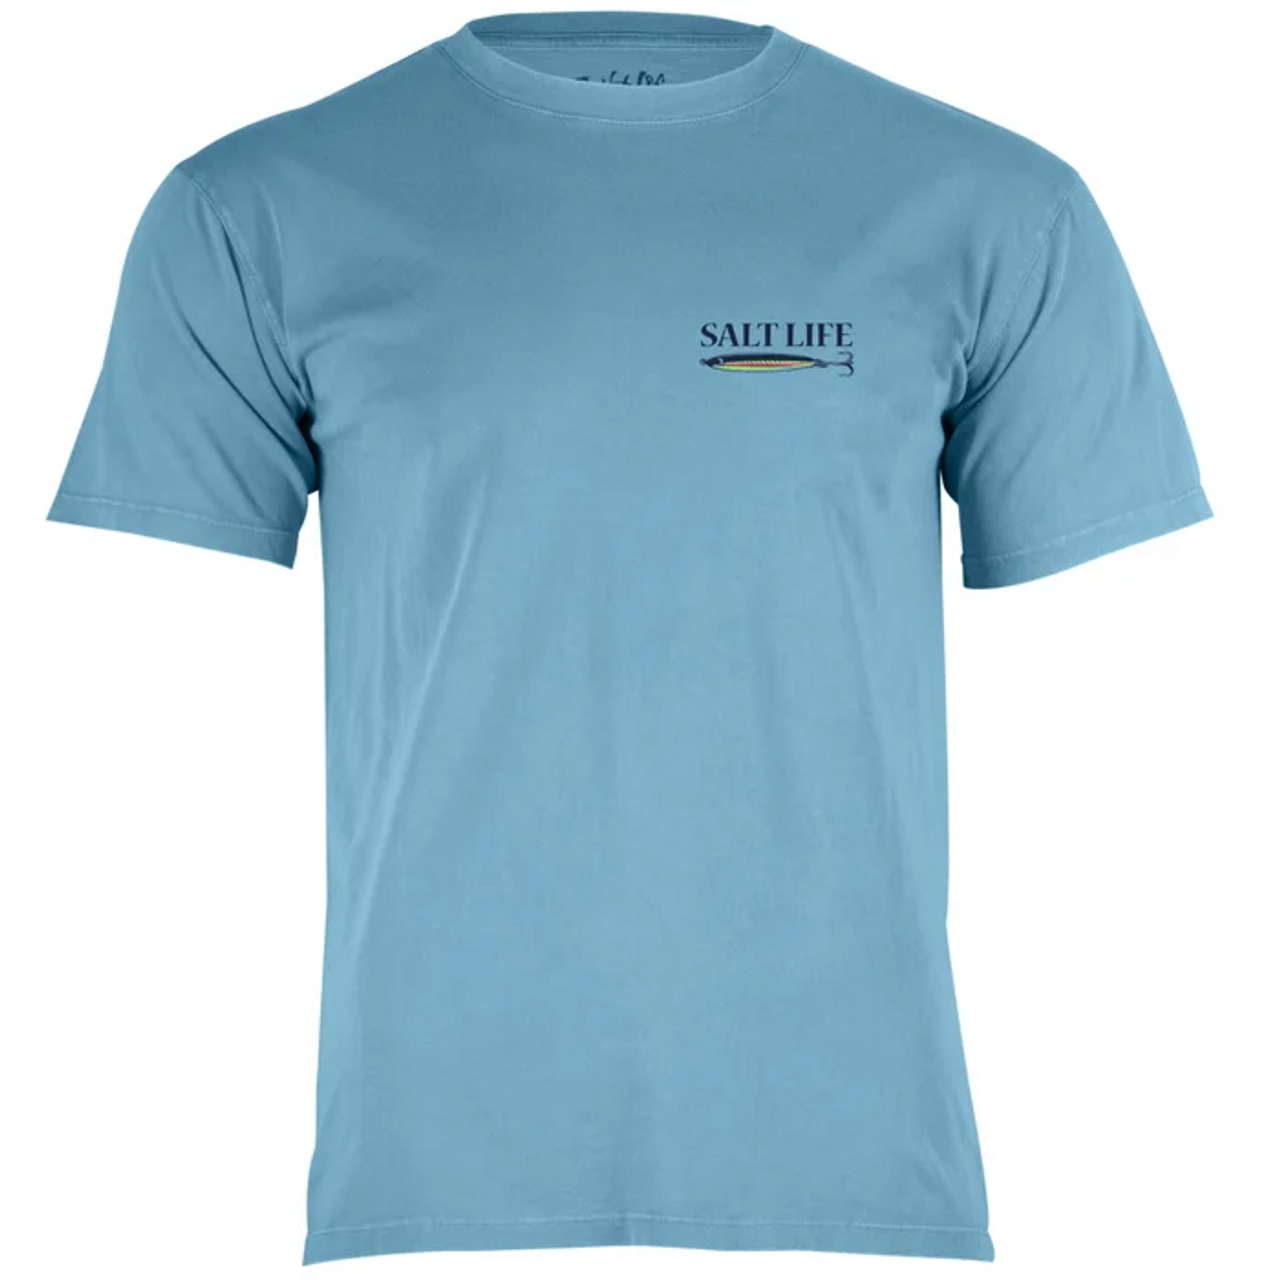 Salt Life Men's S/S Sky Blue Lure Me in T-Shirt